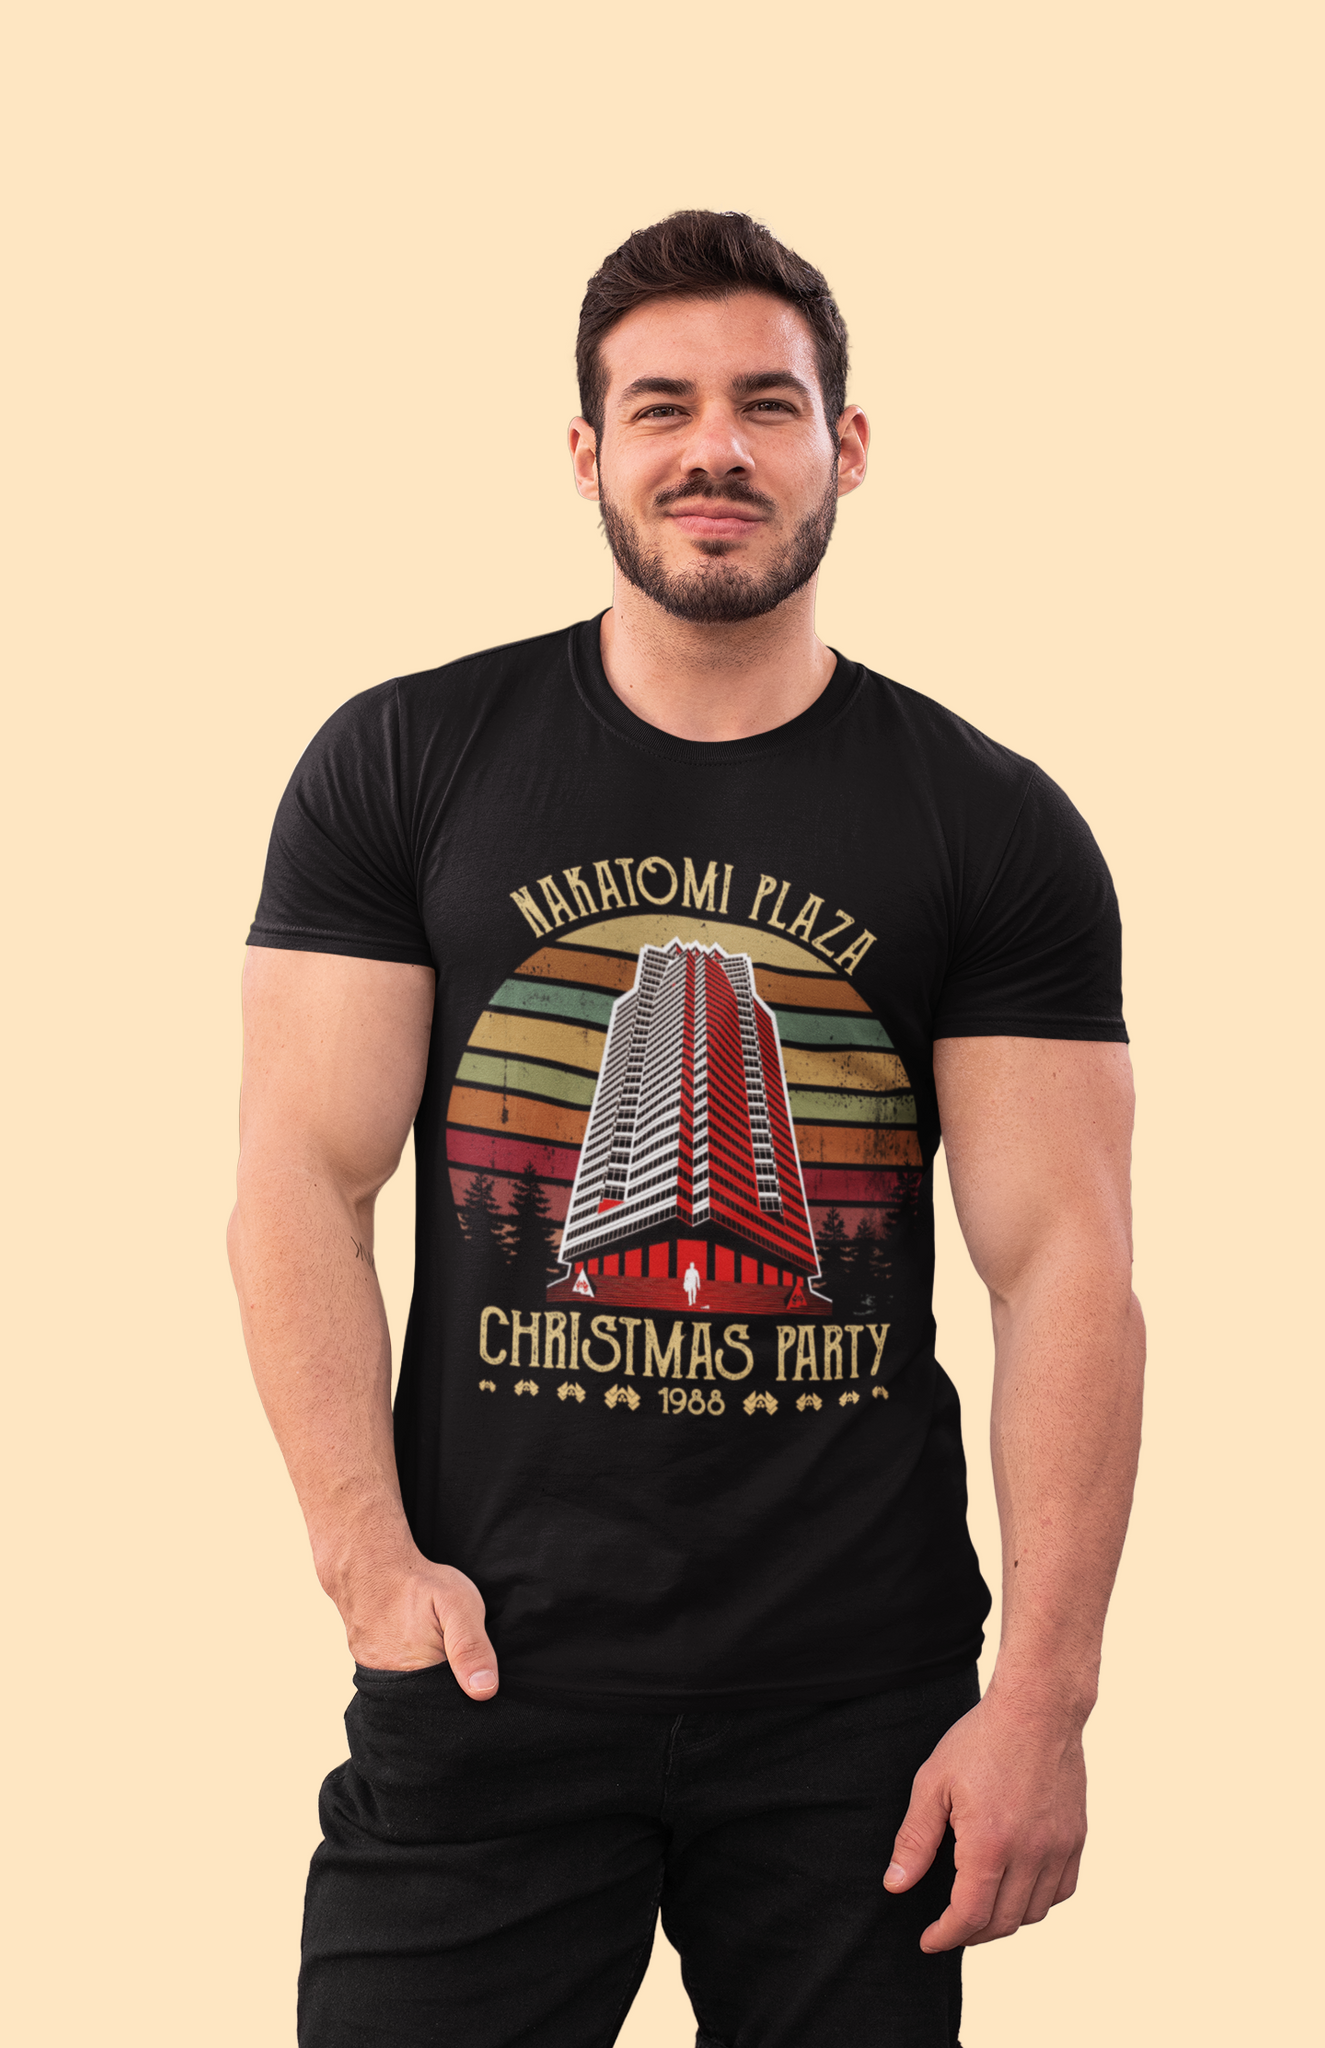 Die Hard Movie T Shirt, Nakatomi Towel T Shirt, Nakatomi Plaza Christmas Party 1988 Tshirt, Christmas Gift